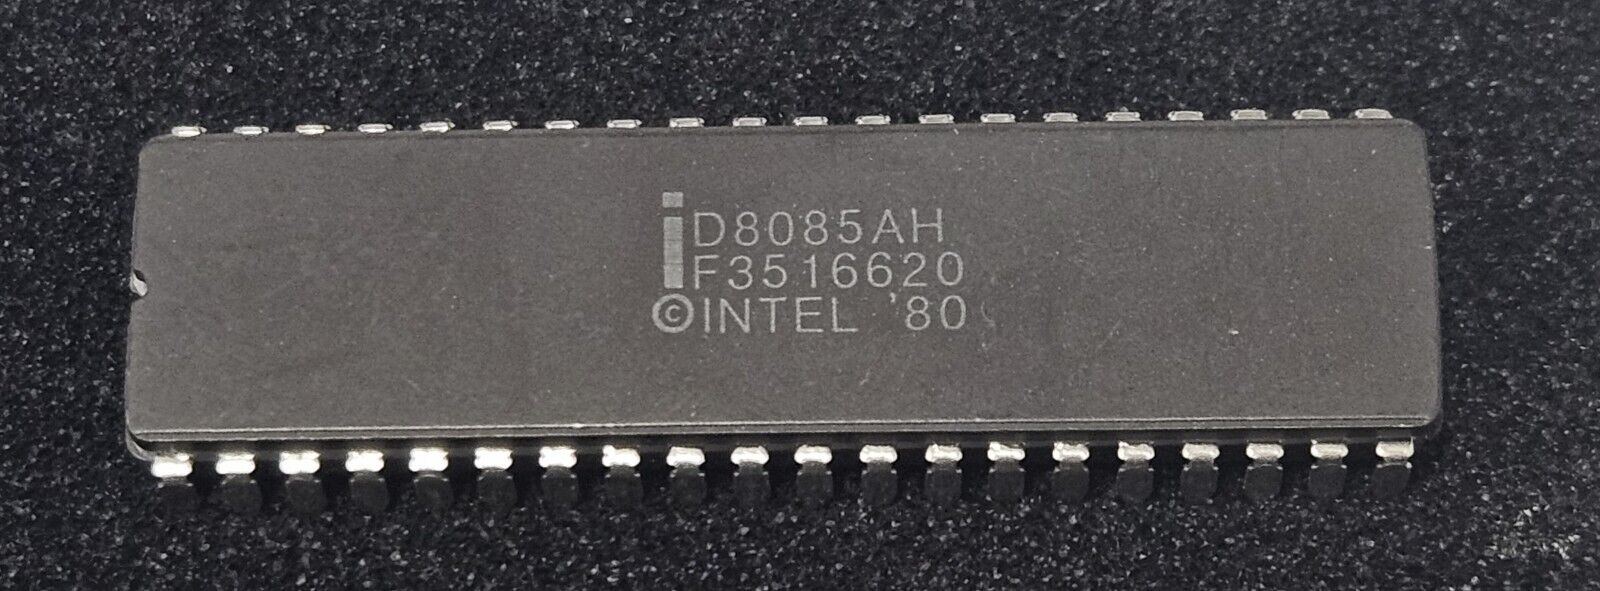 INTEL D8085AH CPU PROCESSOR 8-BIT 3MHZ CERAMIC MICROPROCESSOR DIP40 NOS